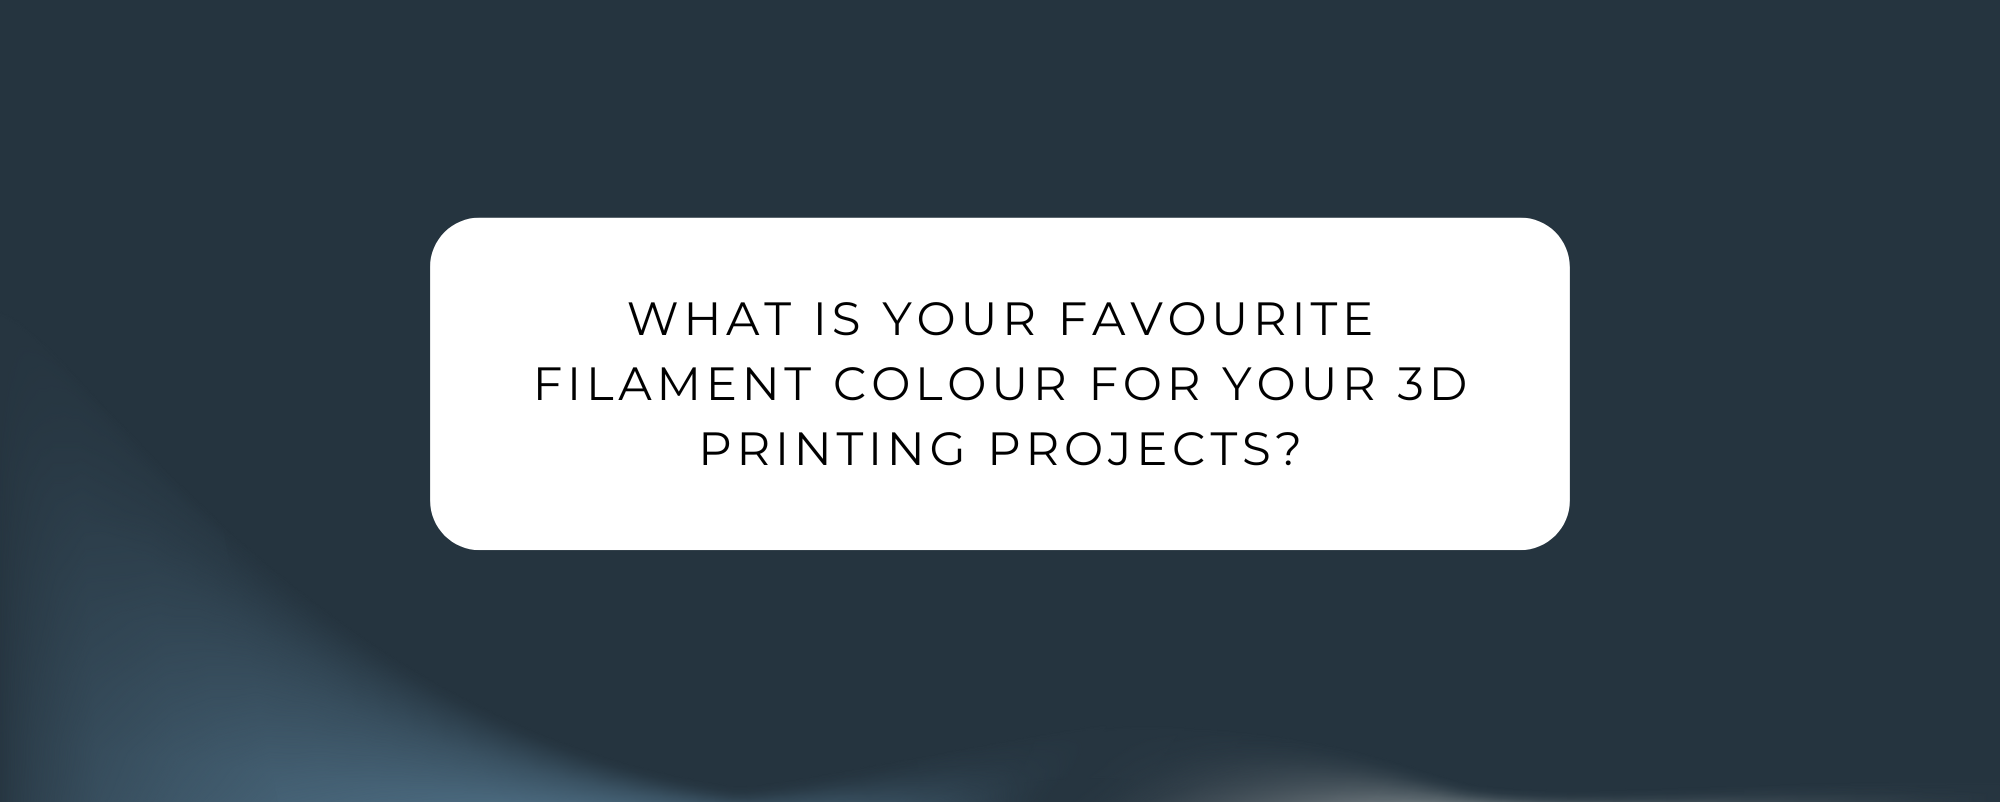 Poll – Filaments colours